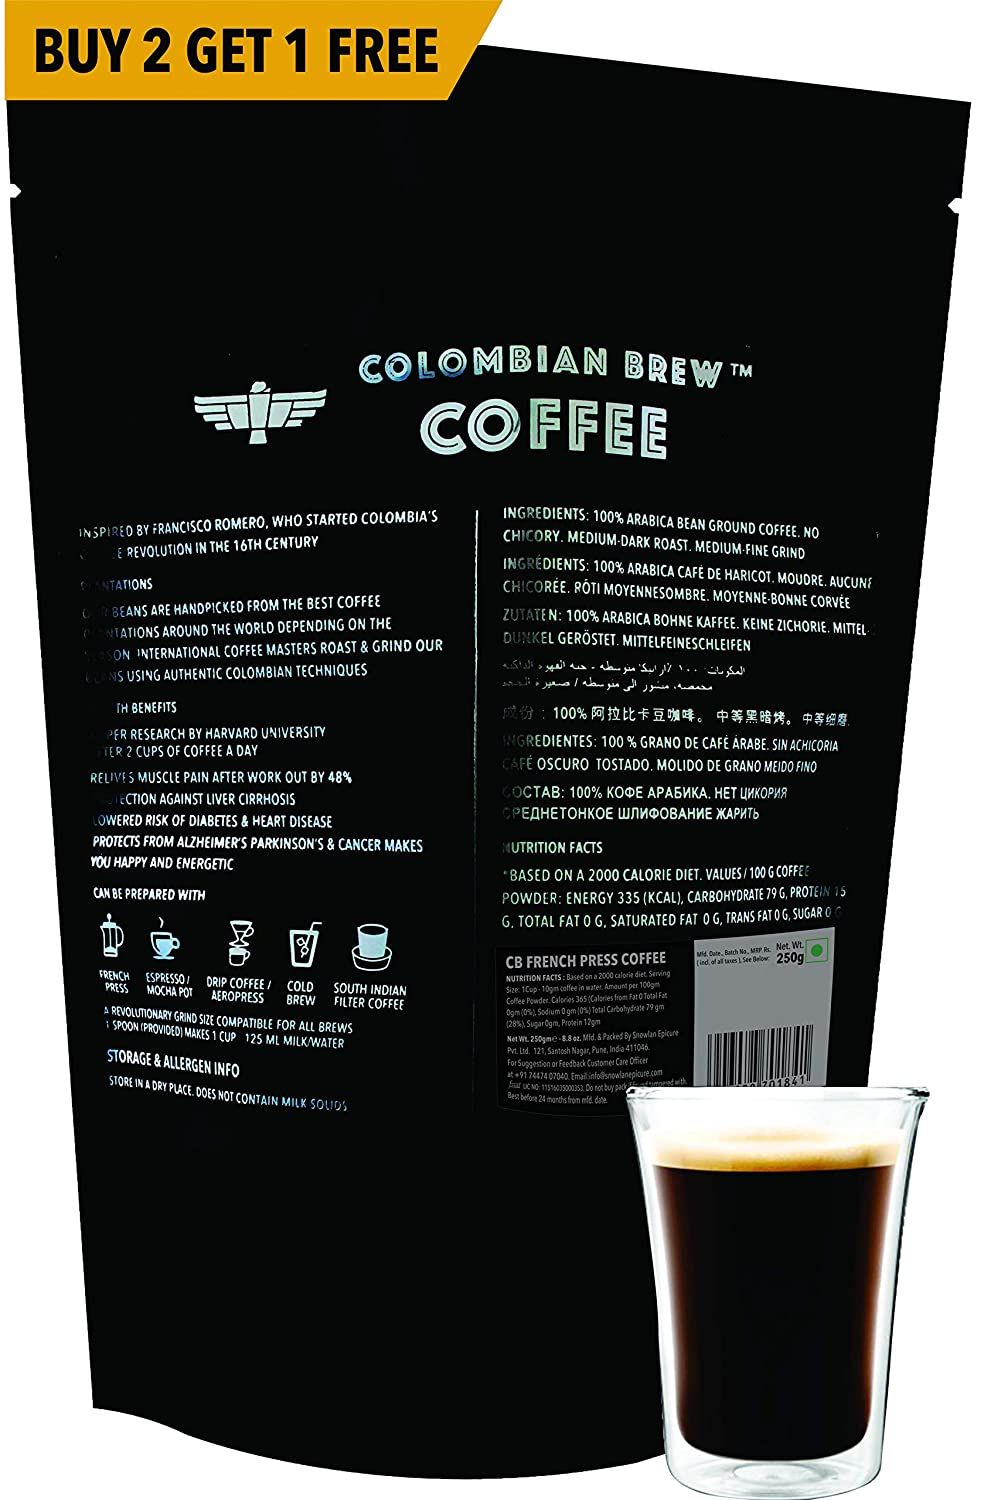 Colombian Brew Arabica French Press Coffee Powder Image